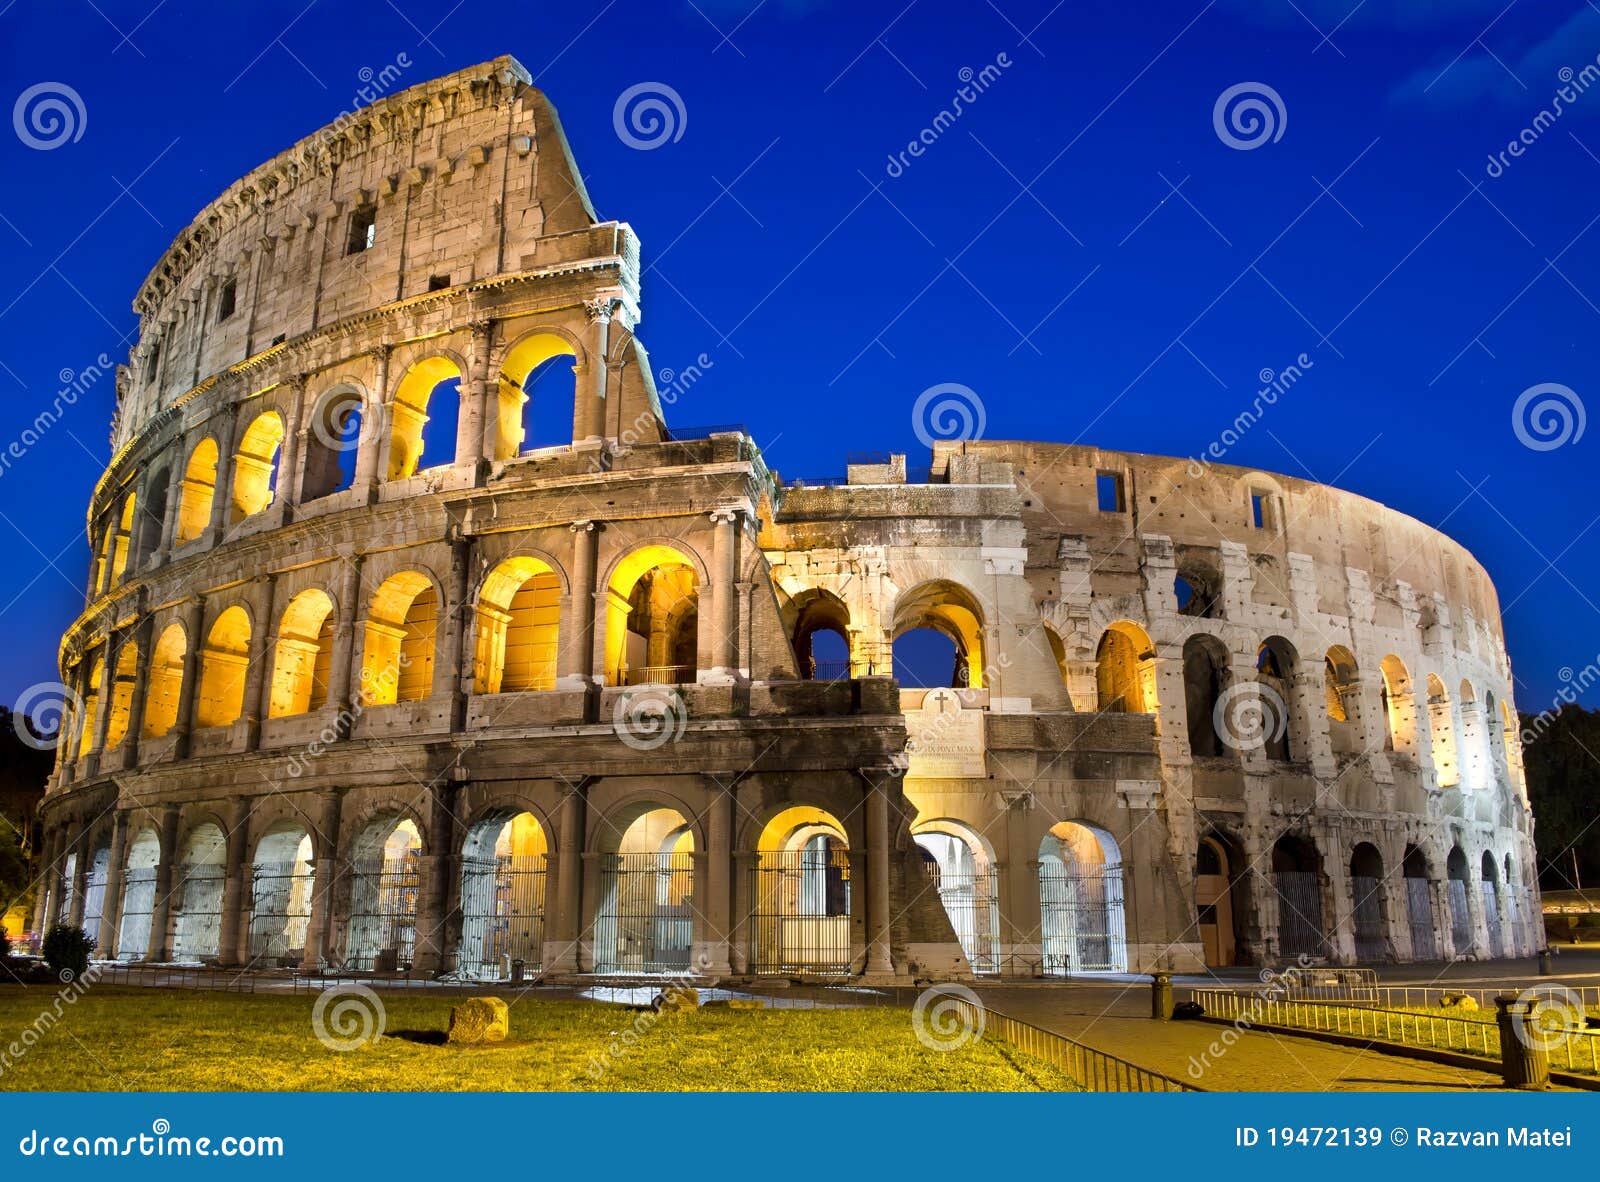 rome - colosseum at dusk